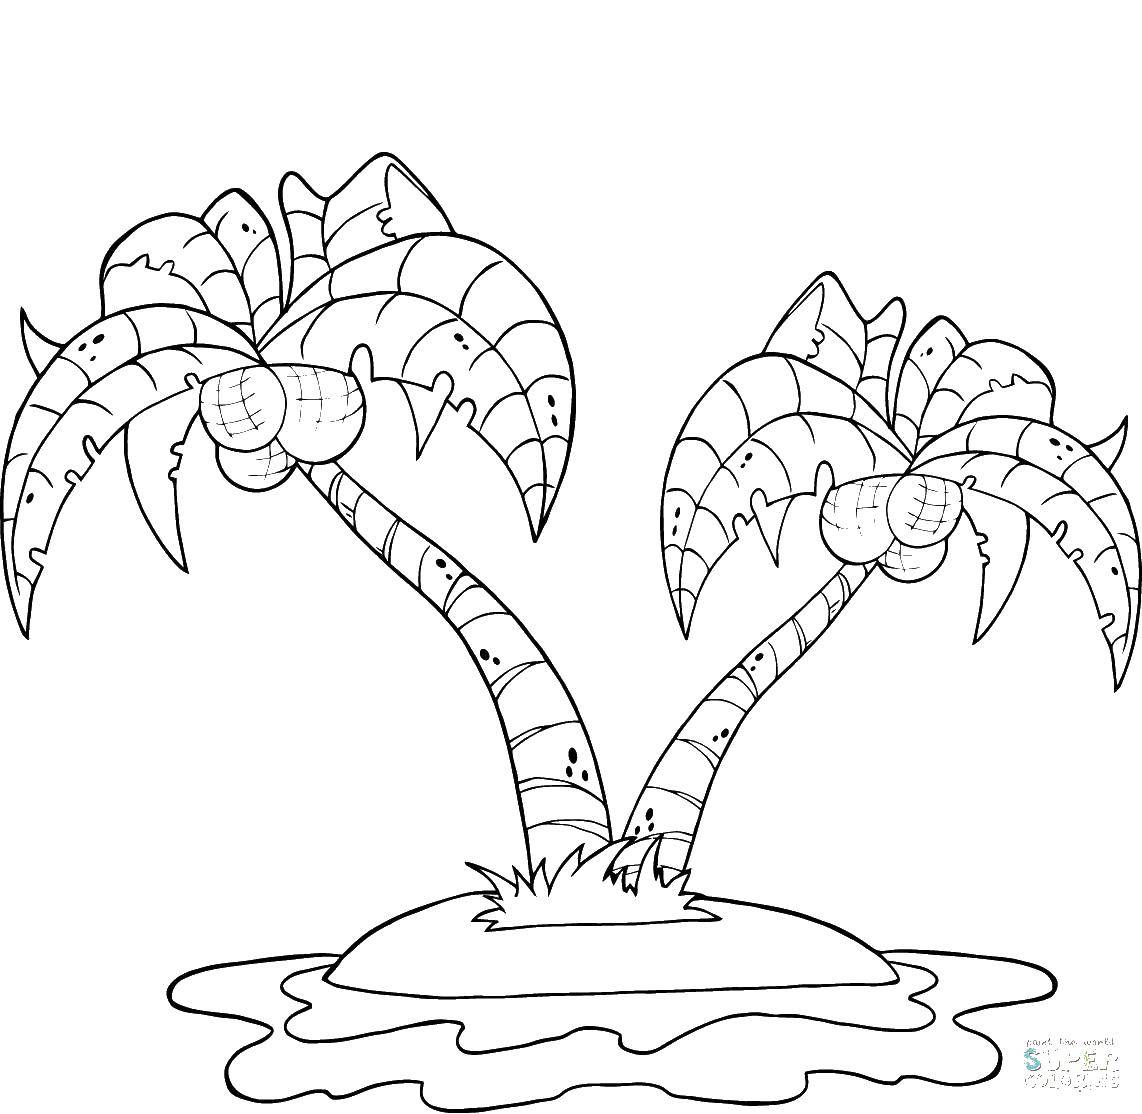 Coloring Palmochki. Category tree. Tags:  Trees, palm tree.